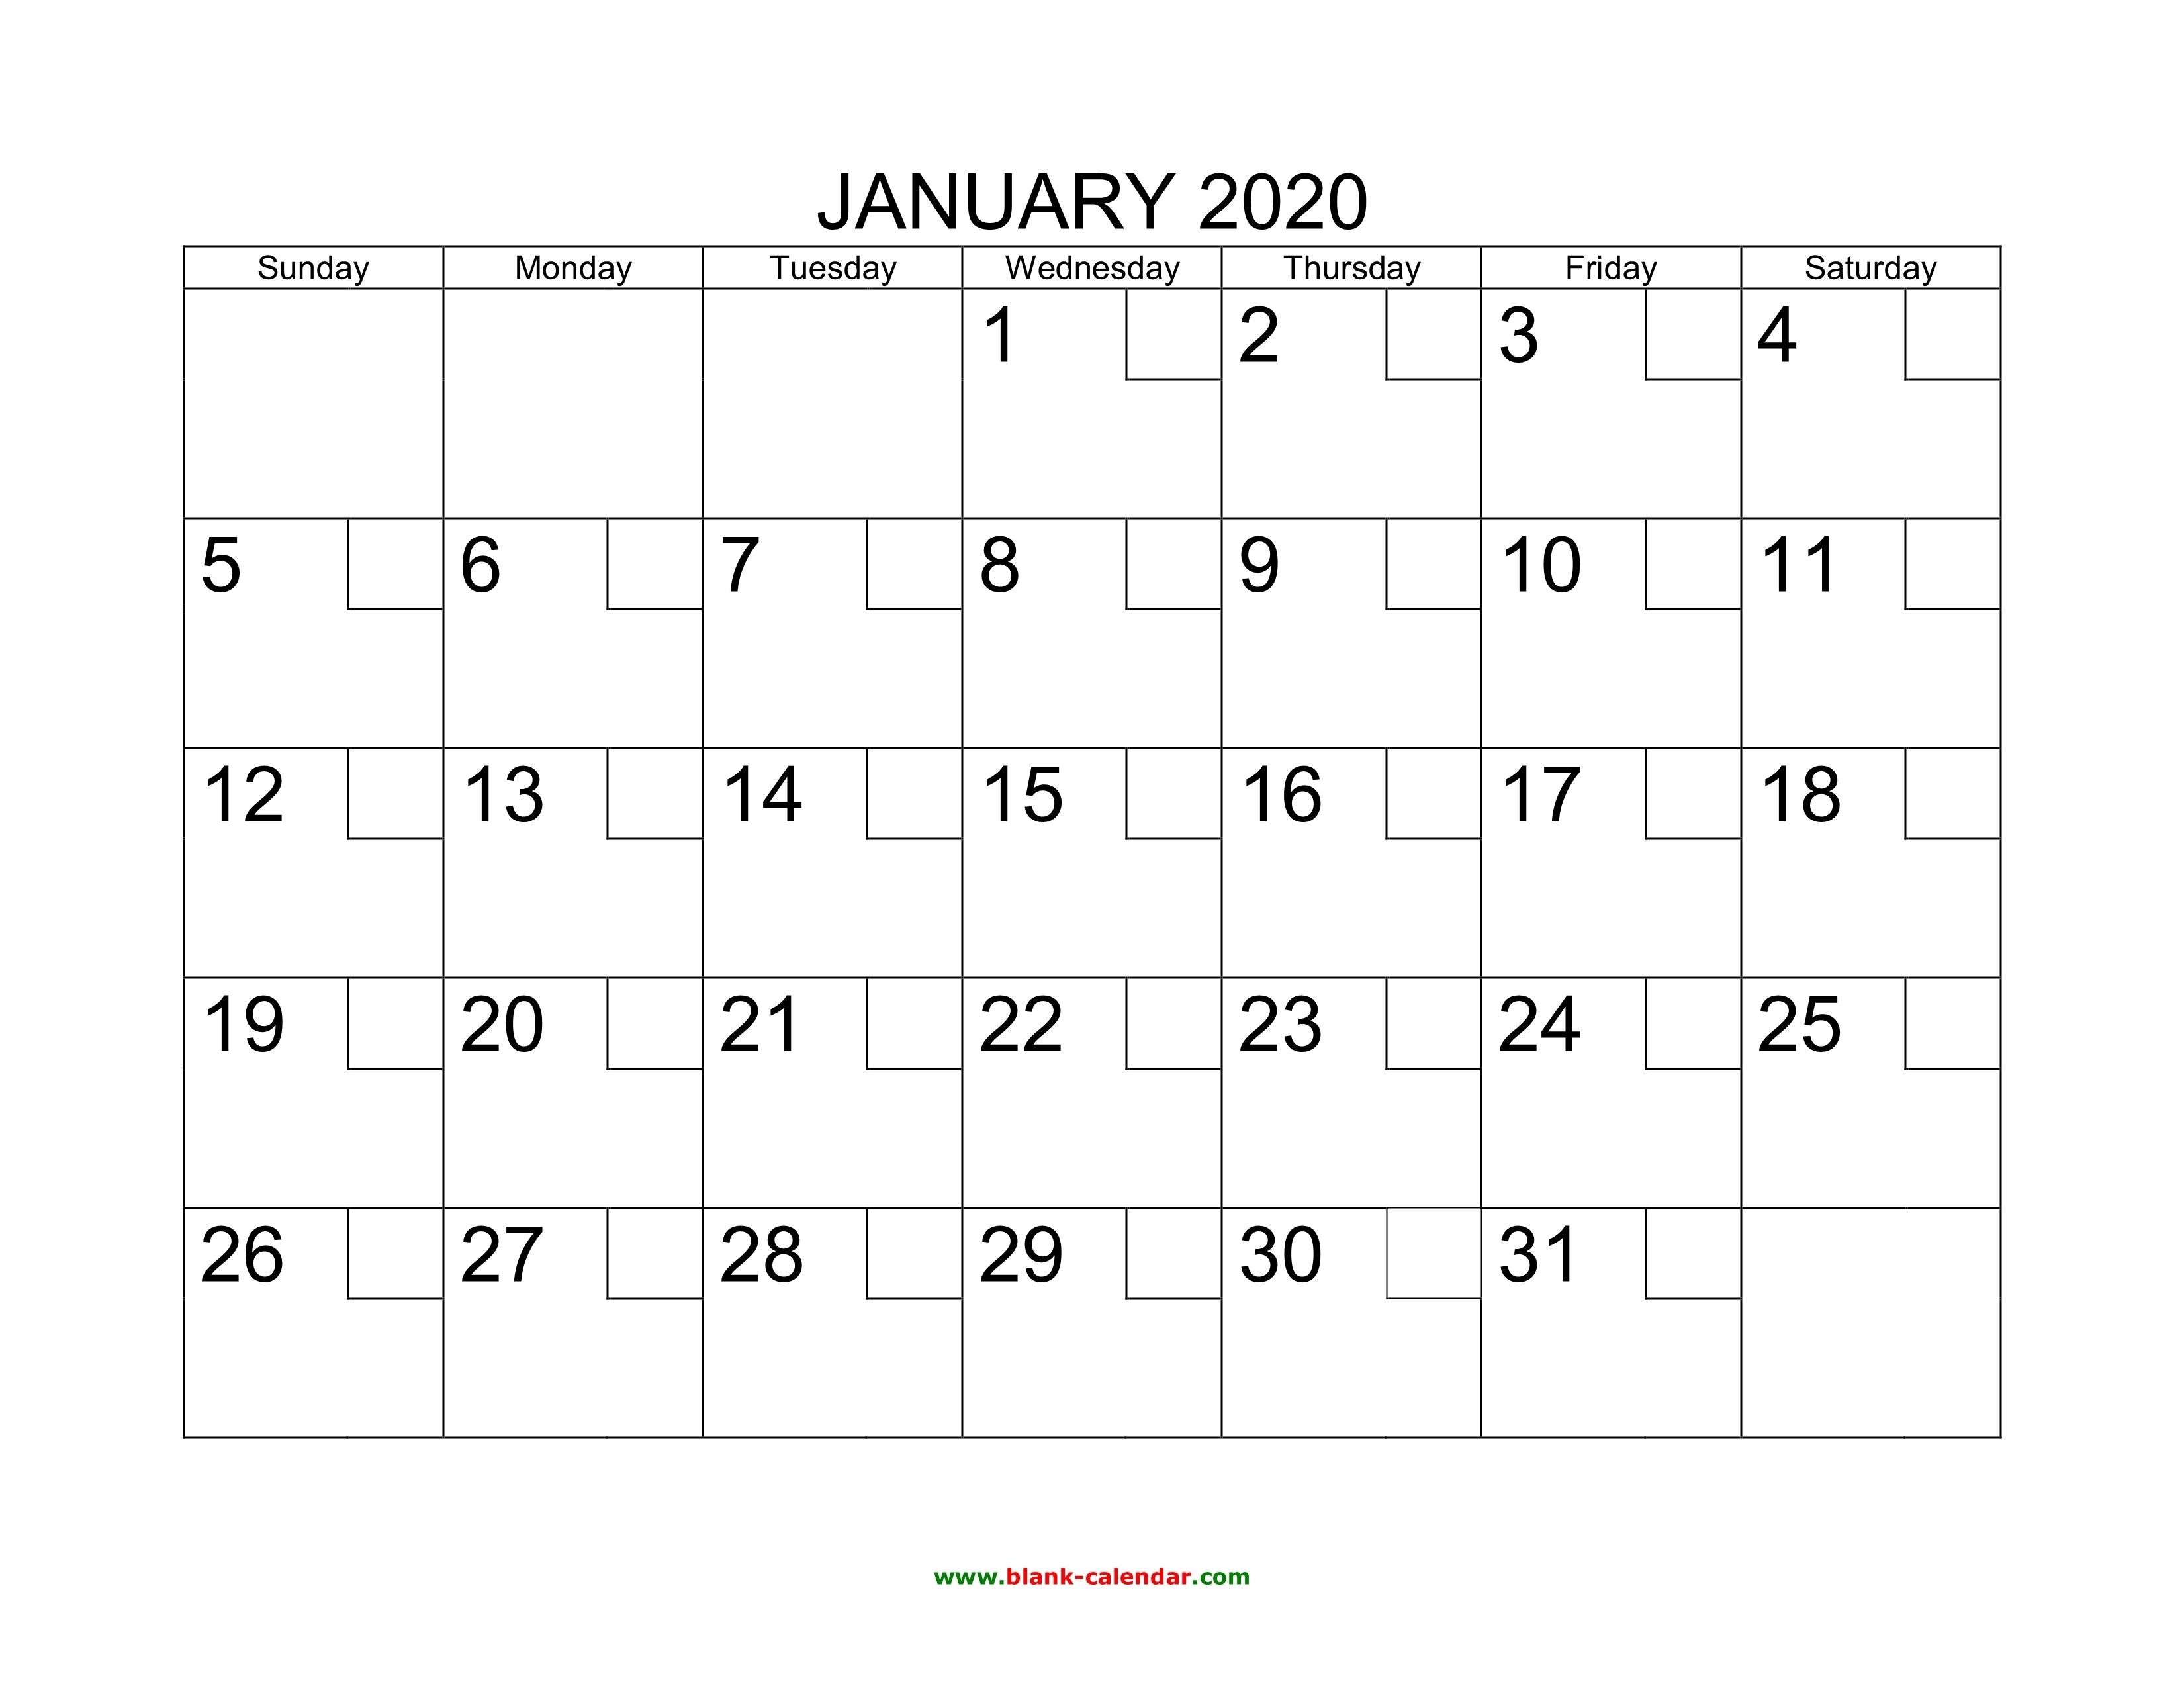 January 2020 Calendar Planner | Blank January 2020 Calendar-Fillable January 2020 Calendar